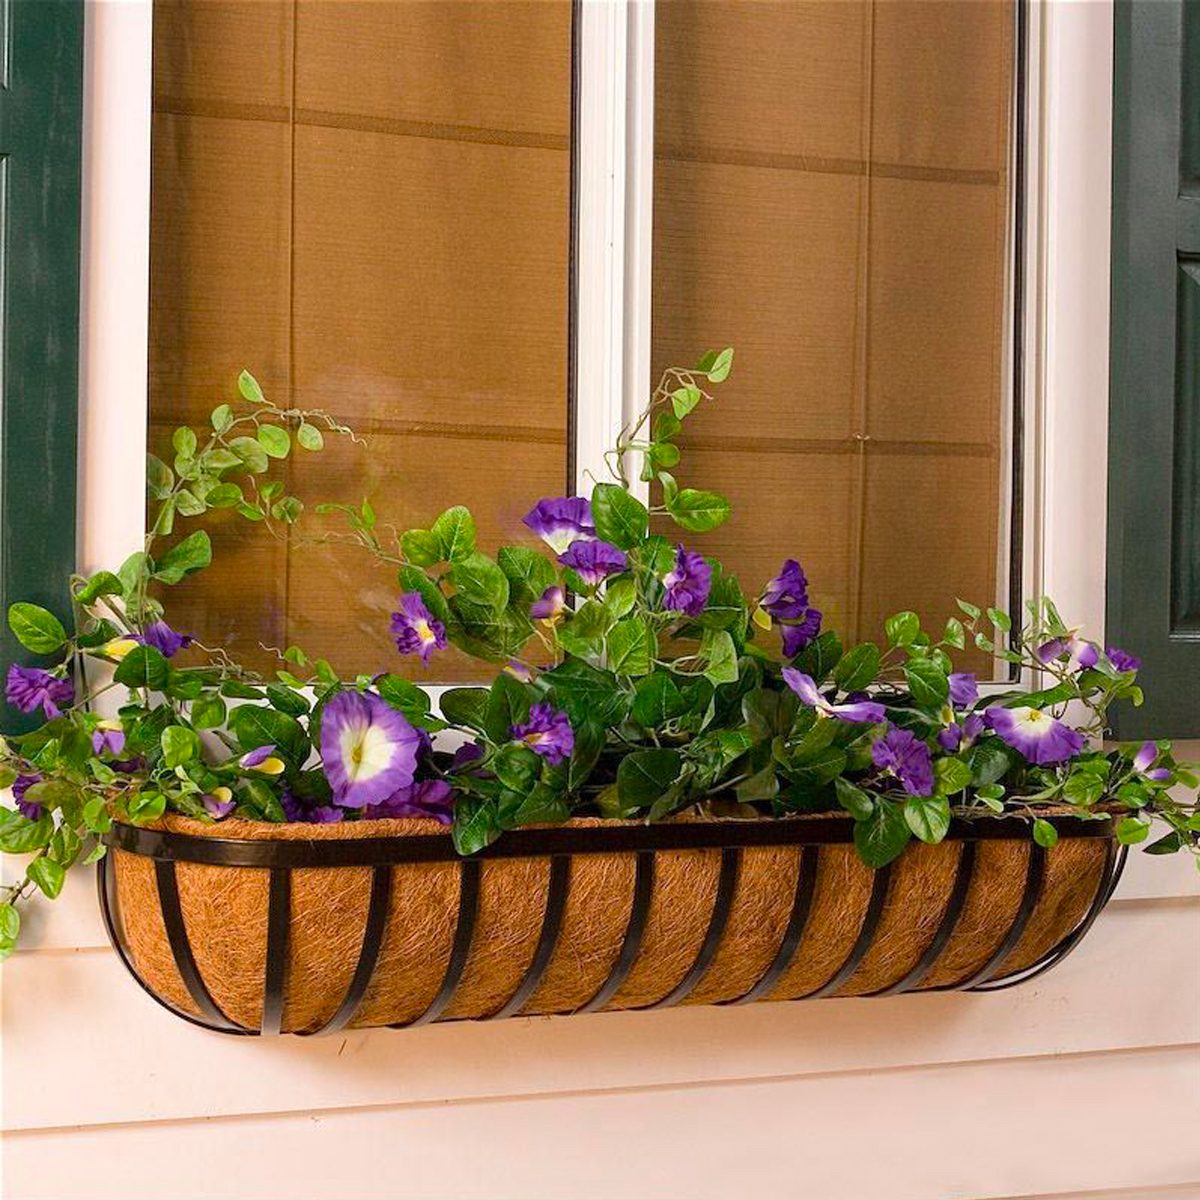 36 Deluxe English Garden Window Box W: Std. Coconut Coir Liner Ecomm Hooksandlattice.com